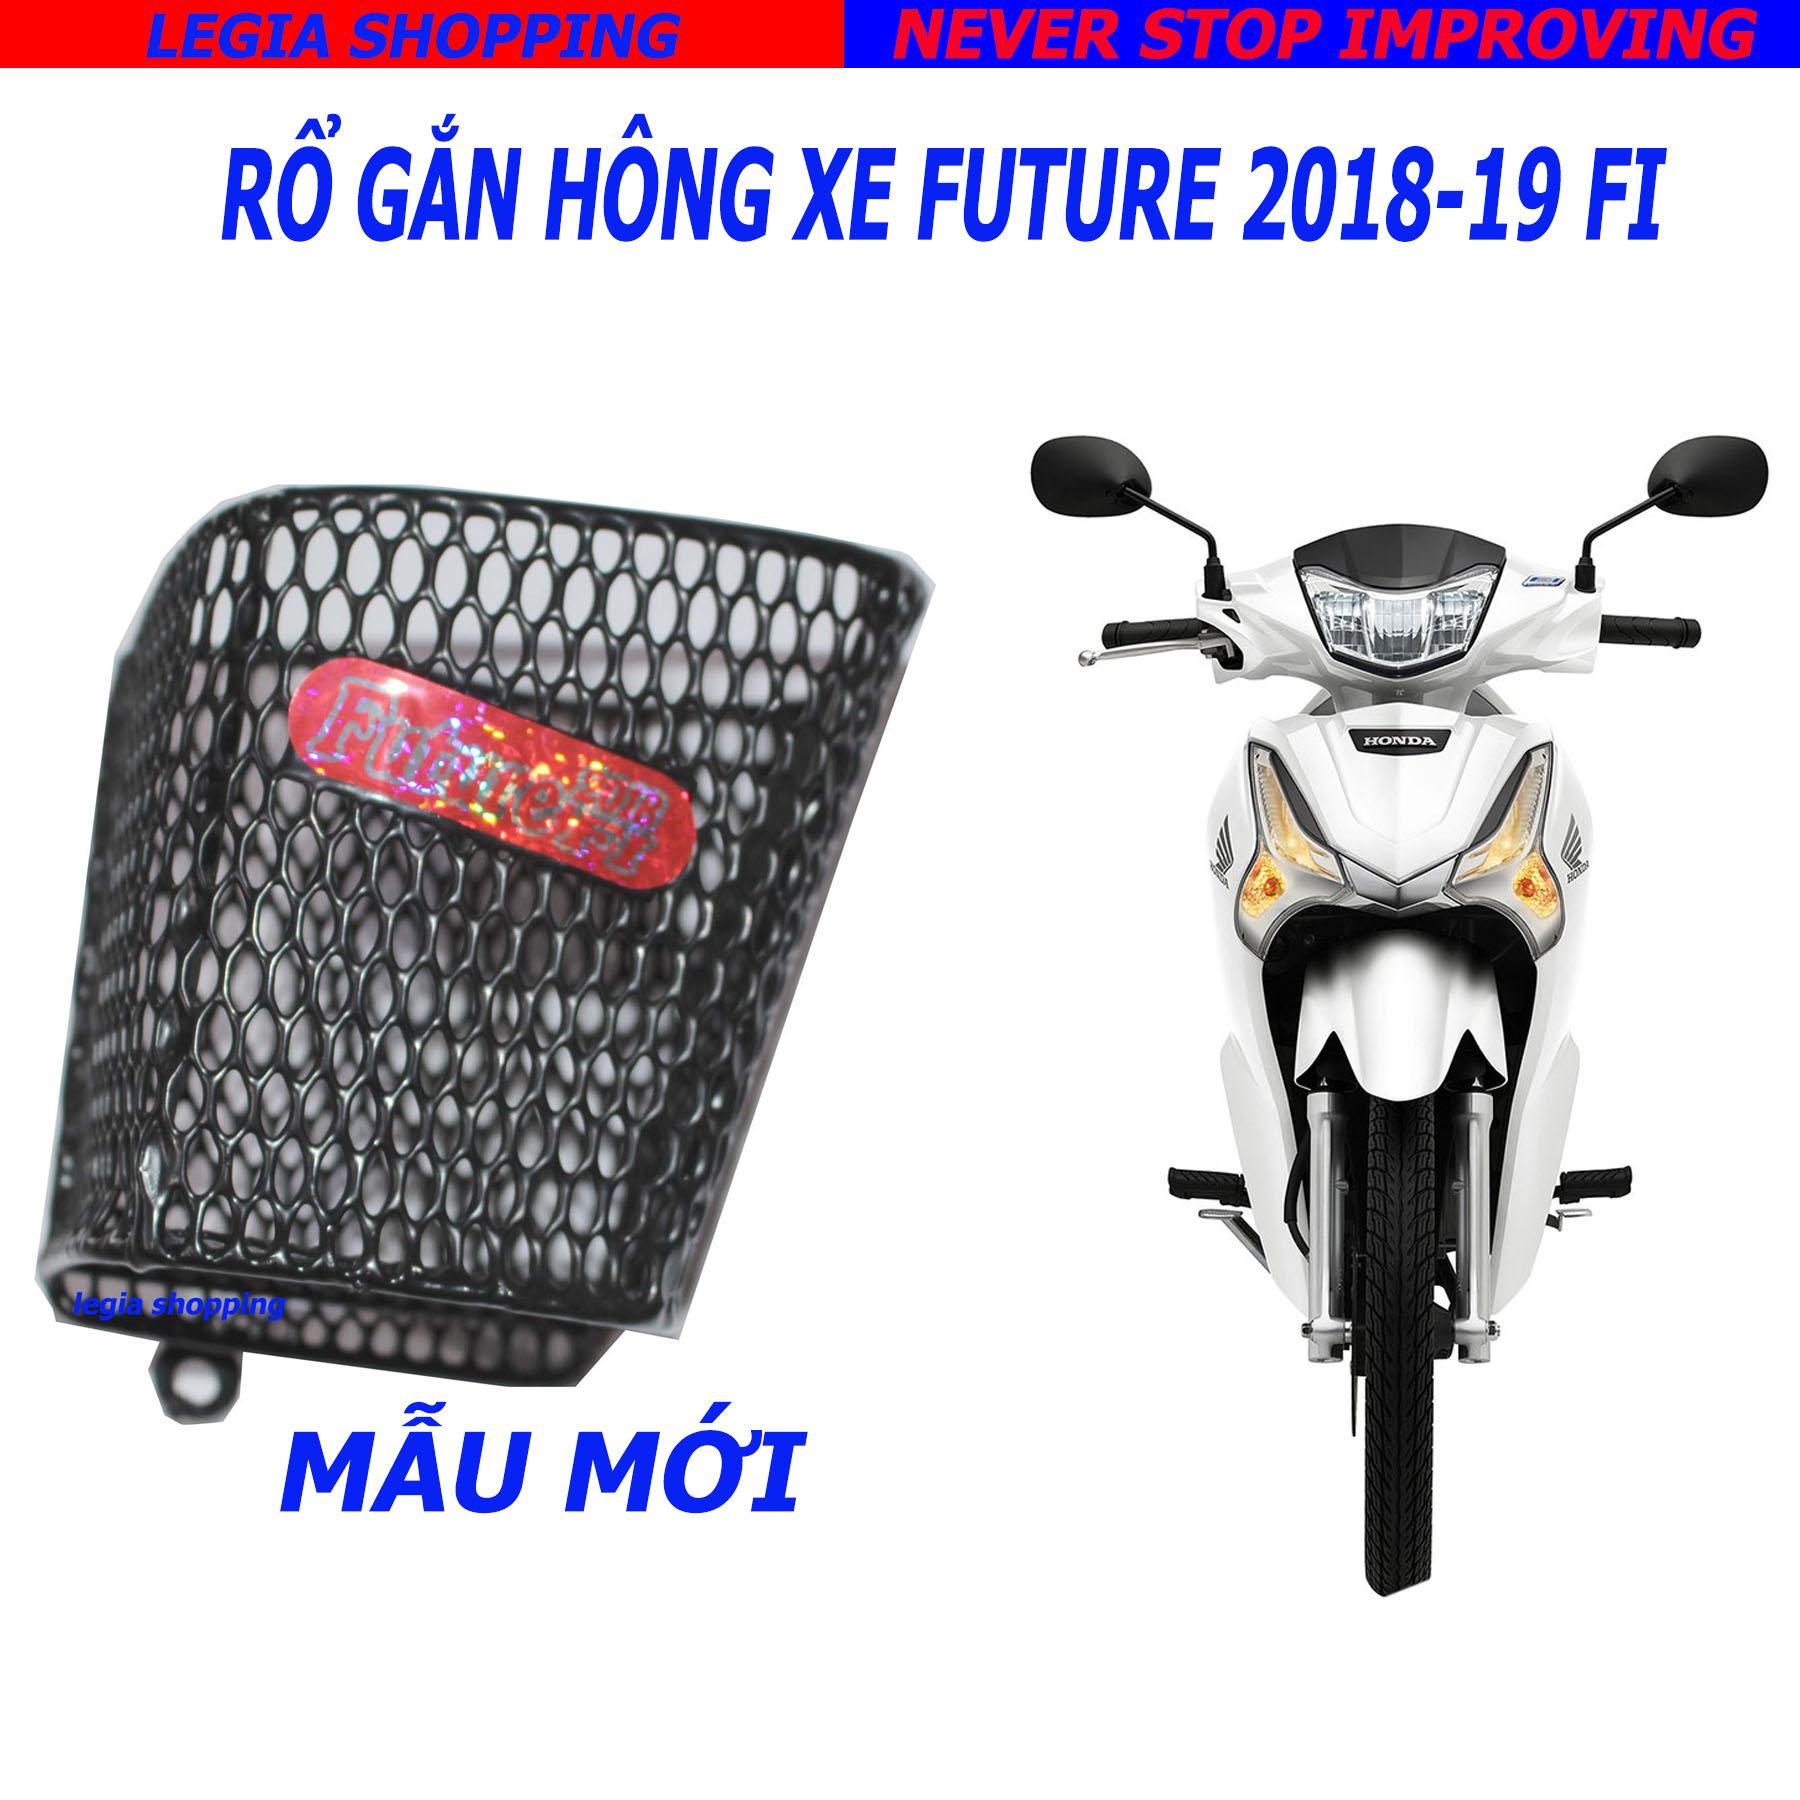 Honda Future FI 125cc 2018 giá bao nhiêu  MuasamXecom